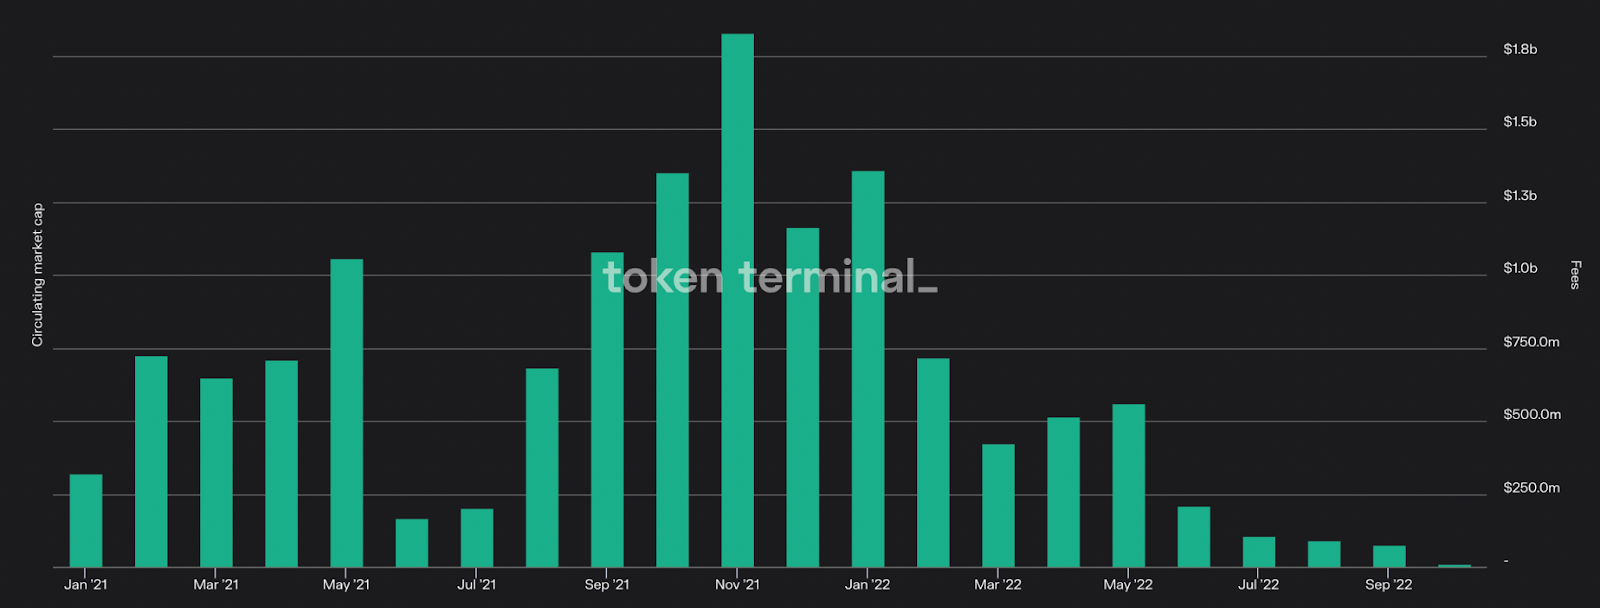 Ethereum Network Revenue - Source: Token Terminal